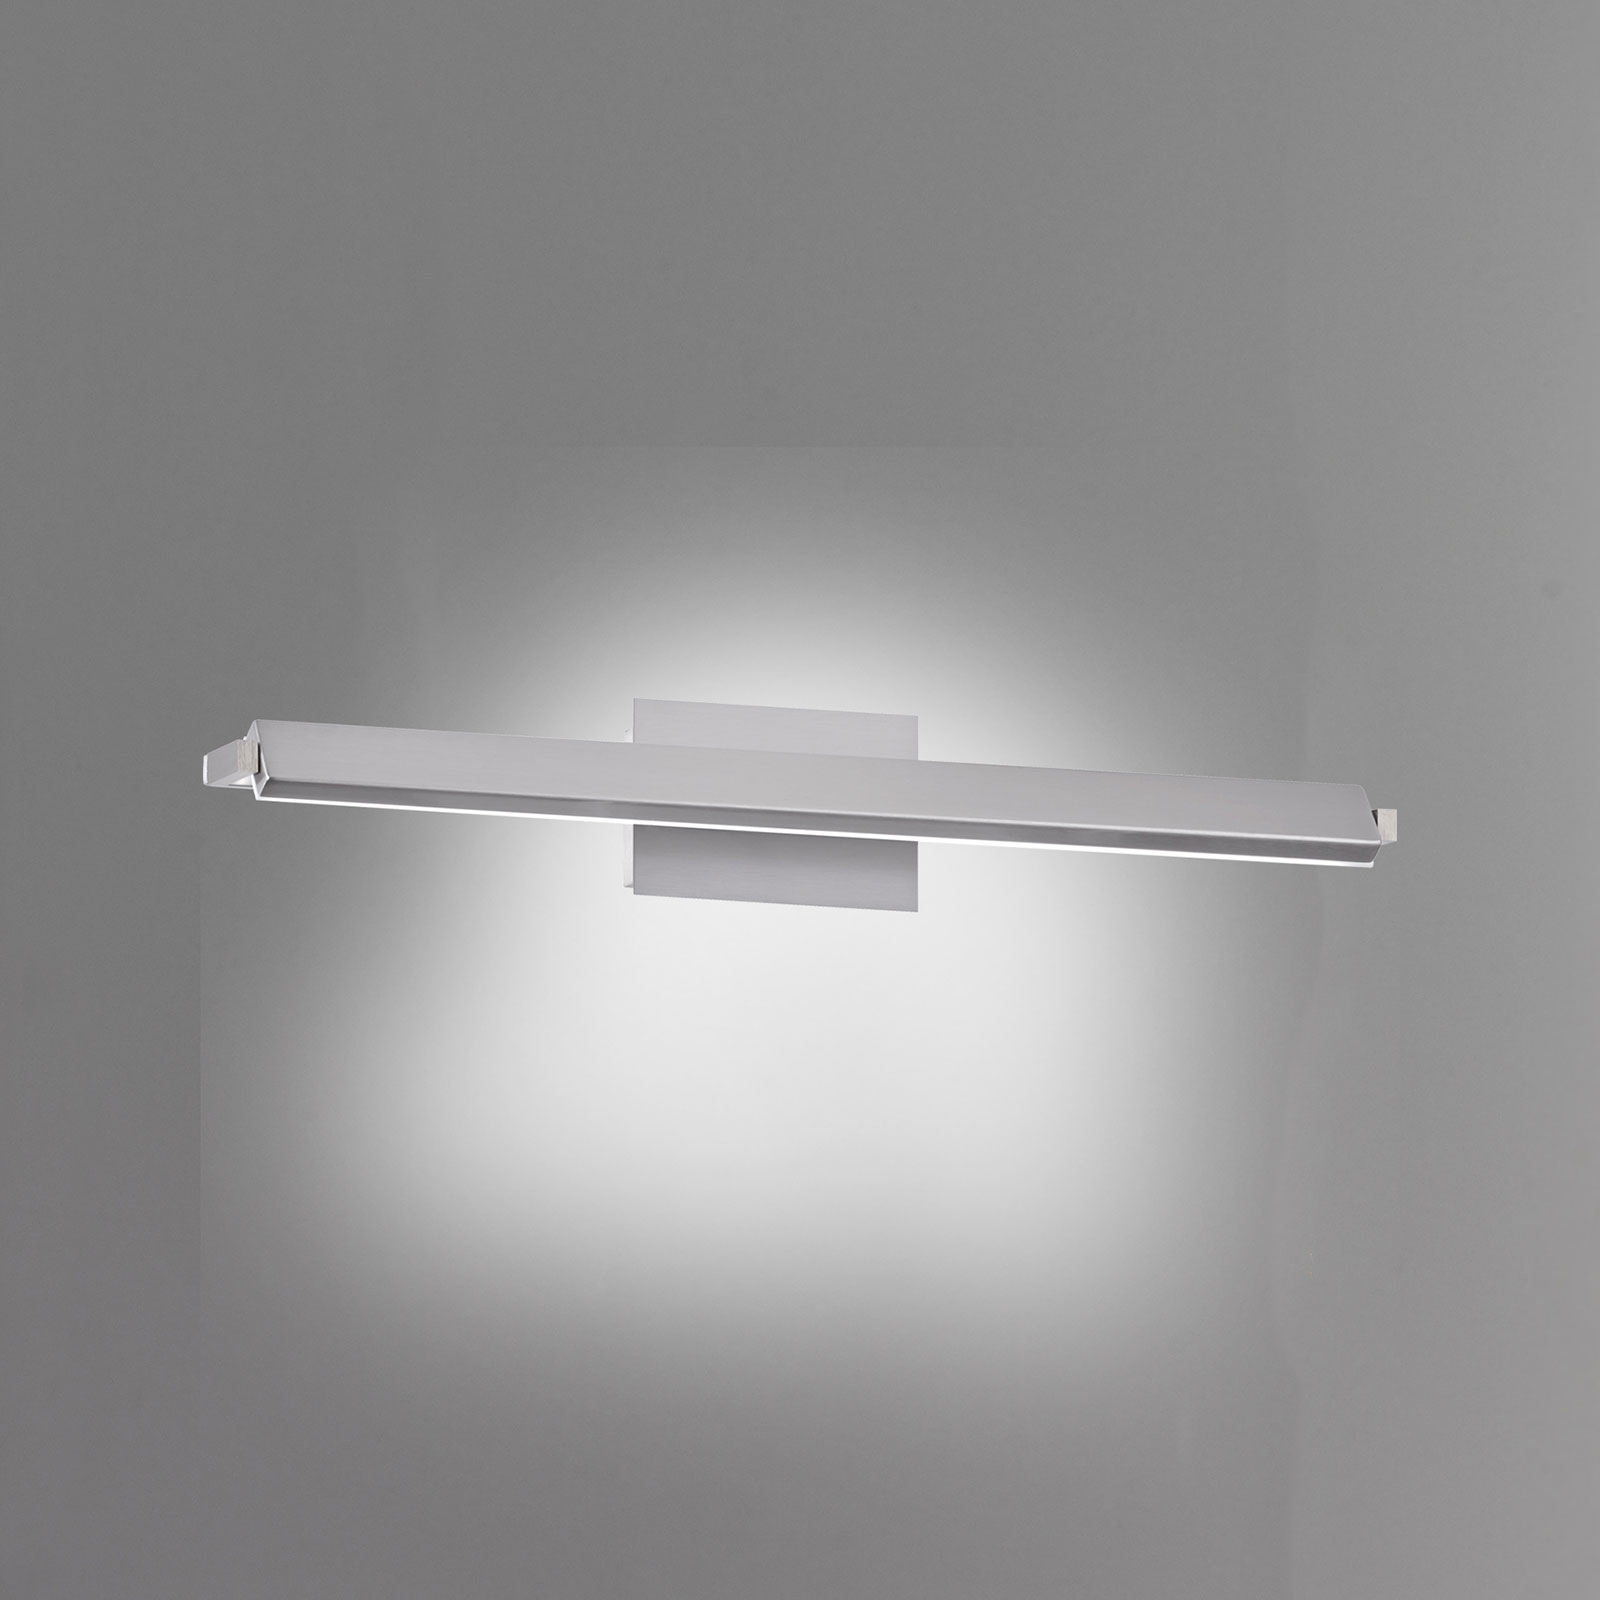 LED-væglampe Pare TW, lysdæmper, 3 lysfarver 60cm